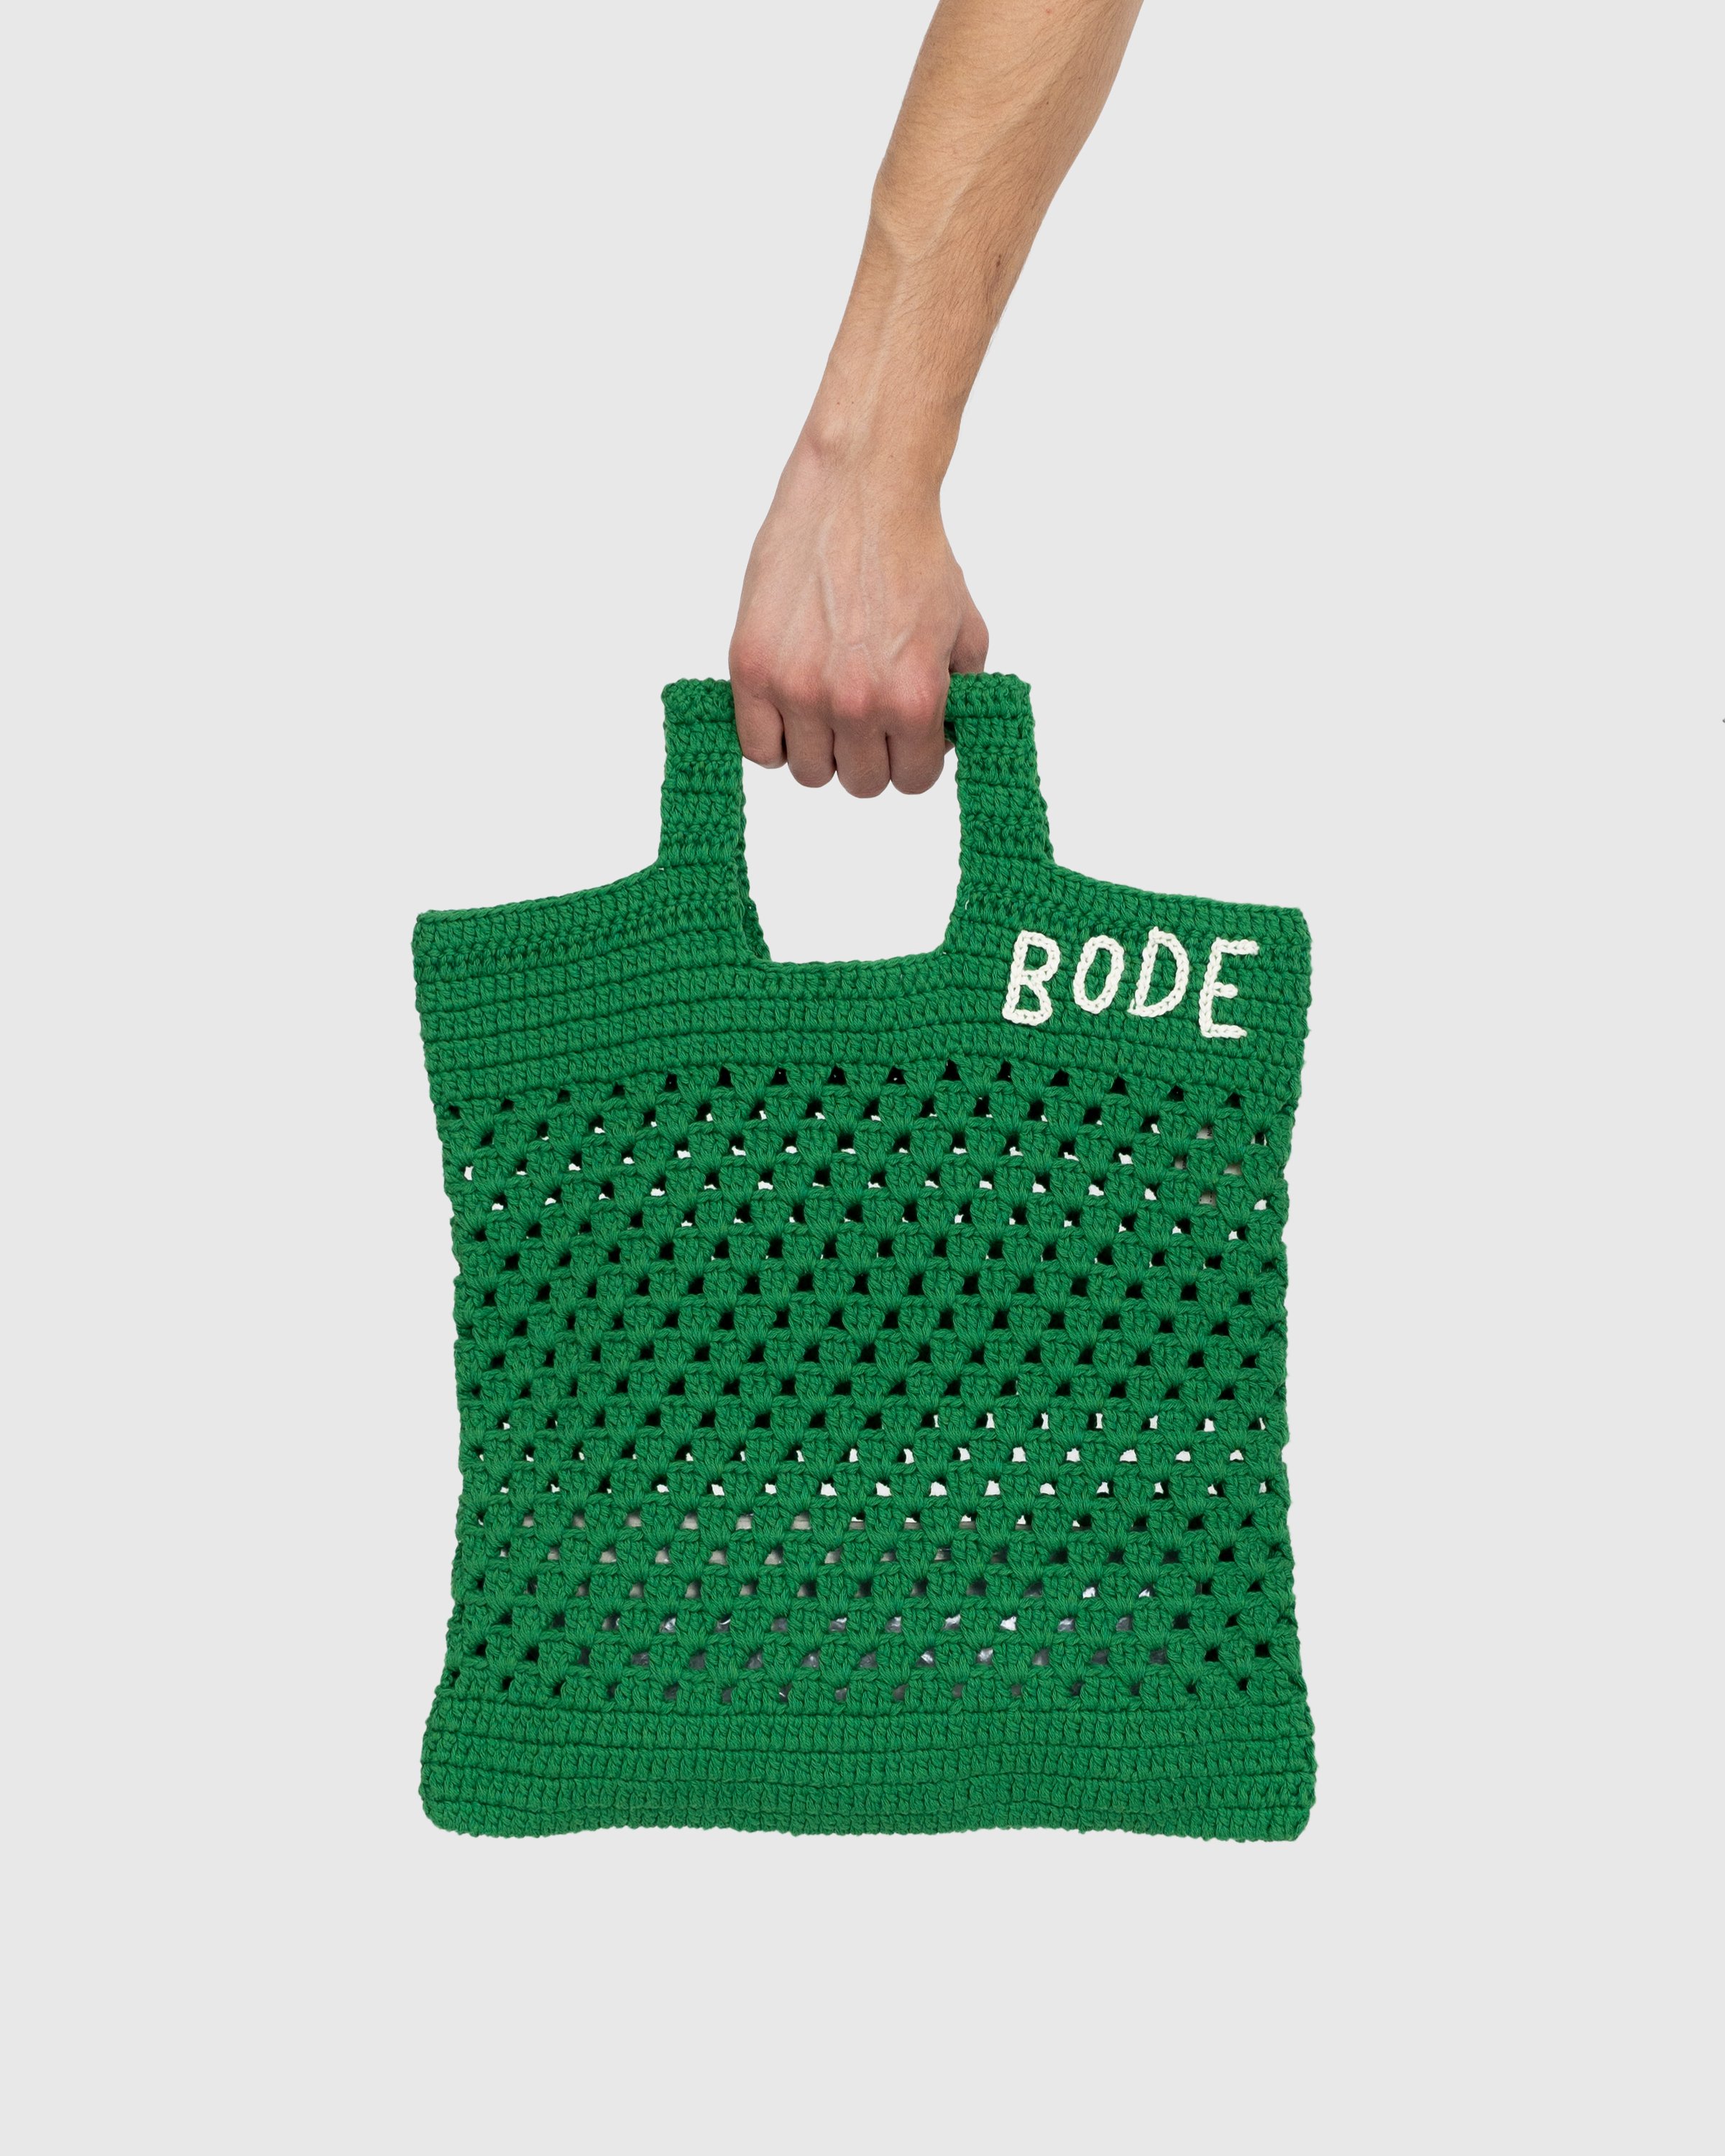 Bode - Crochet Tote Green - Accessories - Green - Image 3